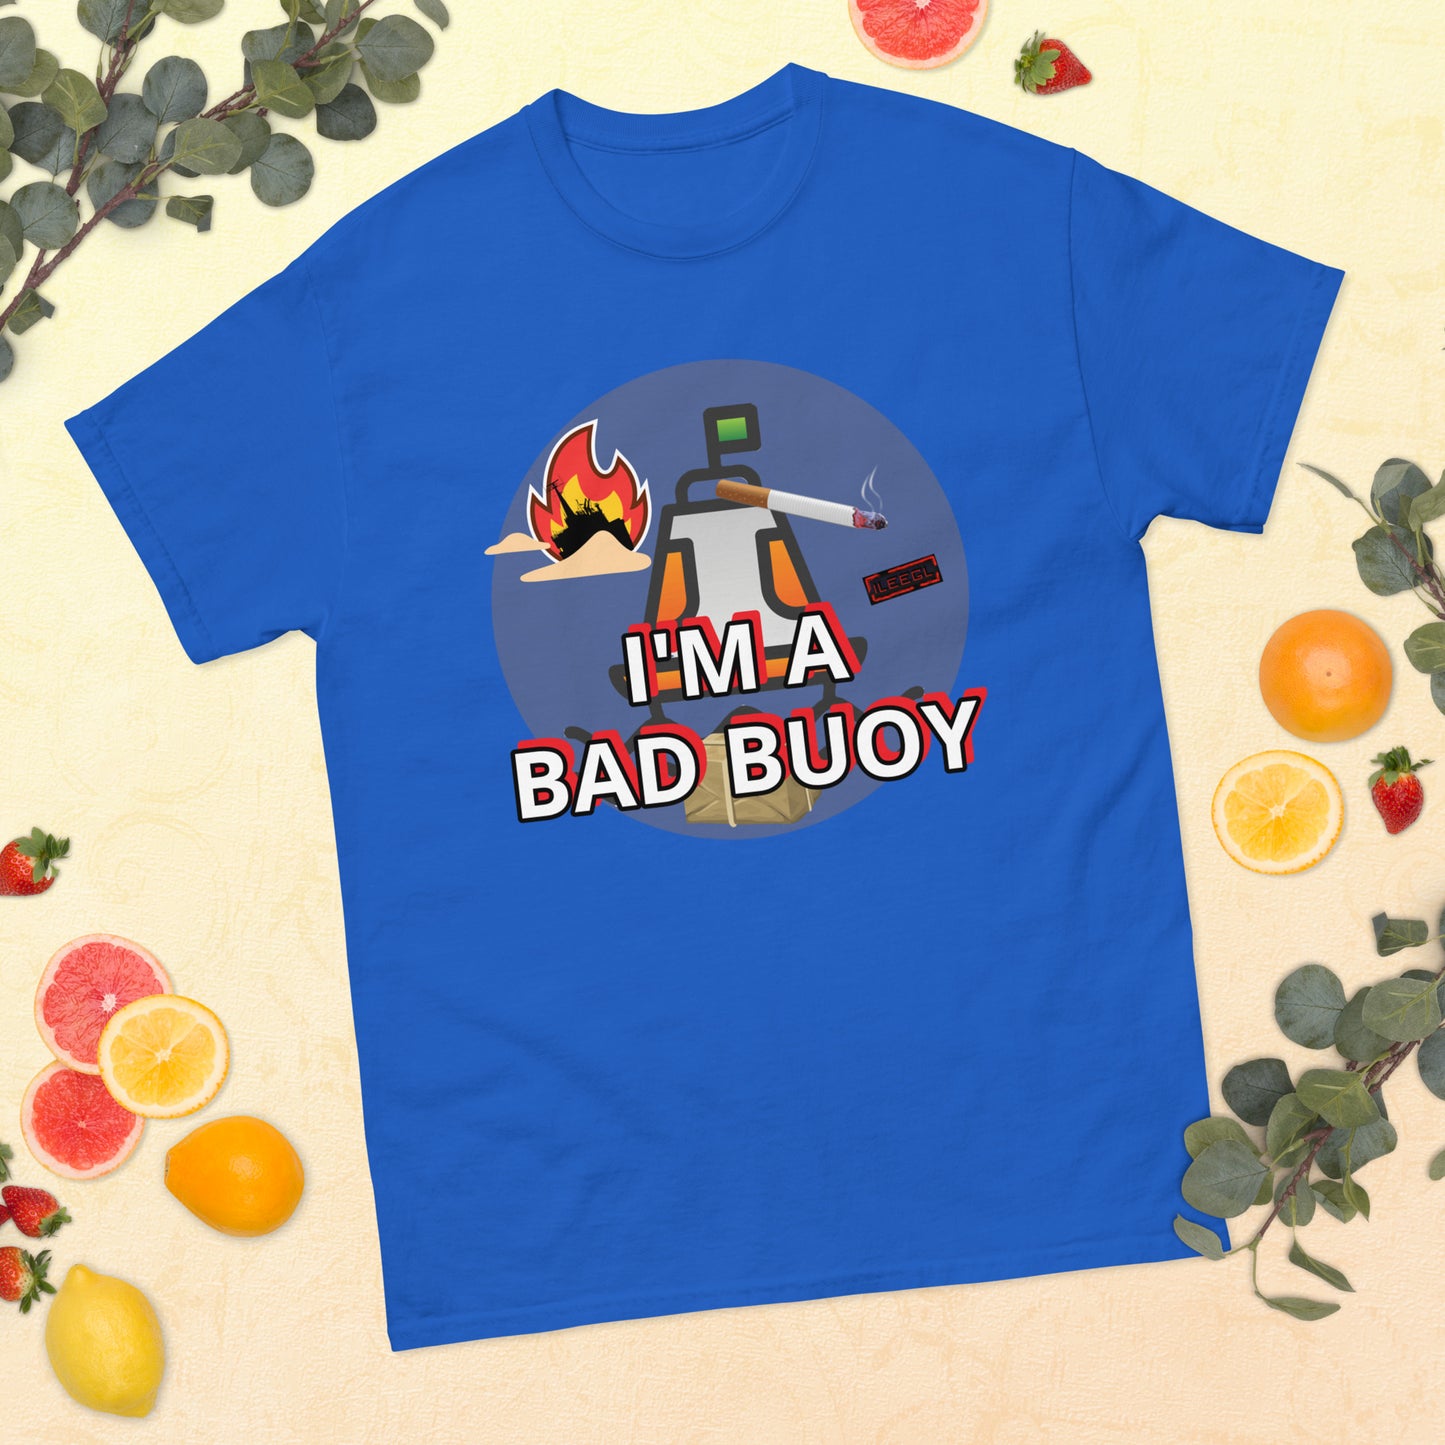 Bad Buoy T-Shirt